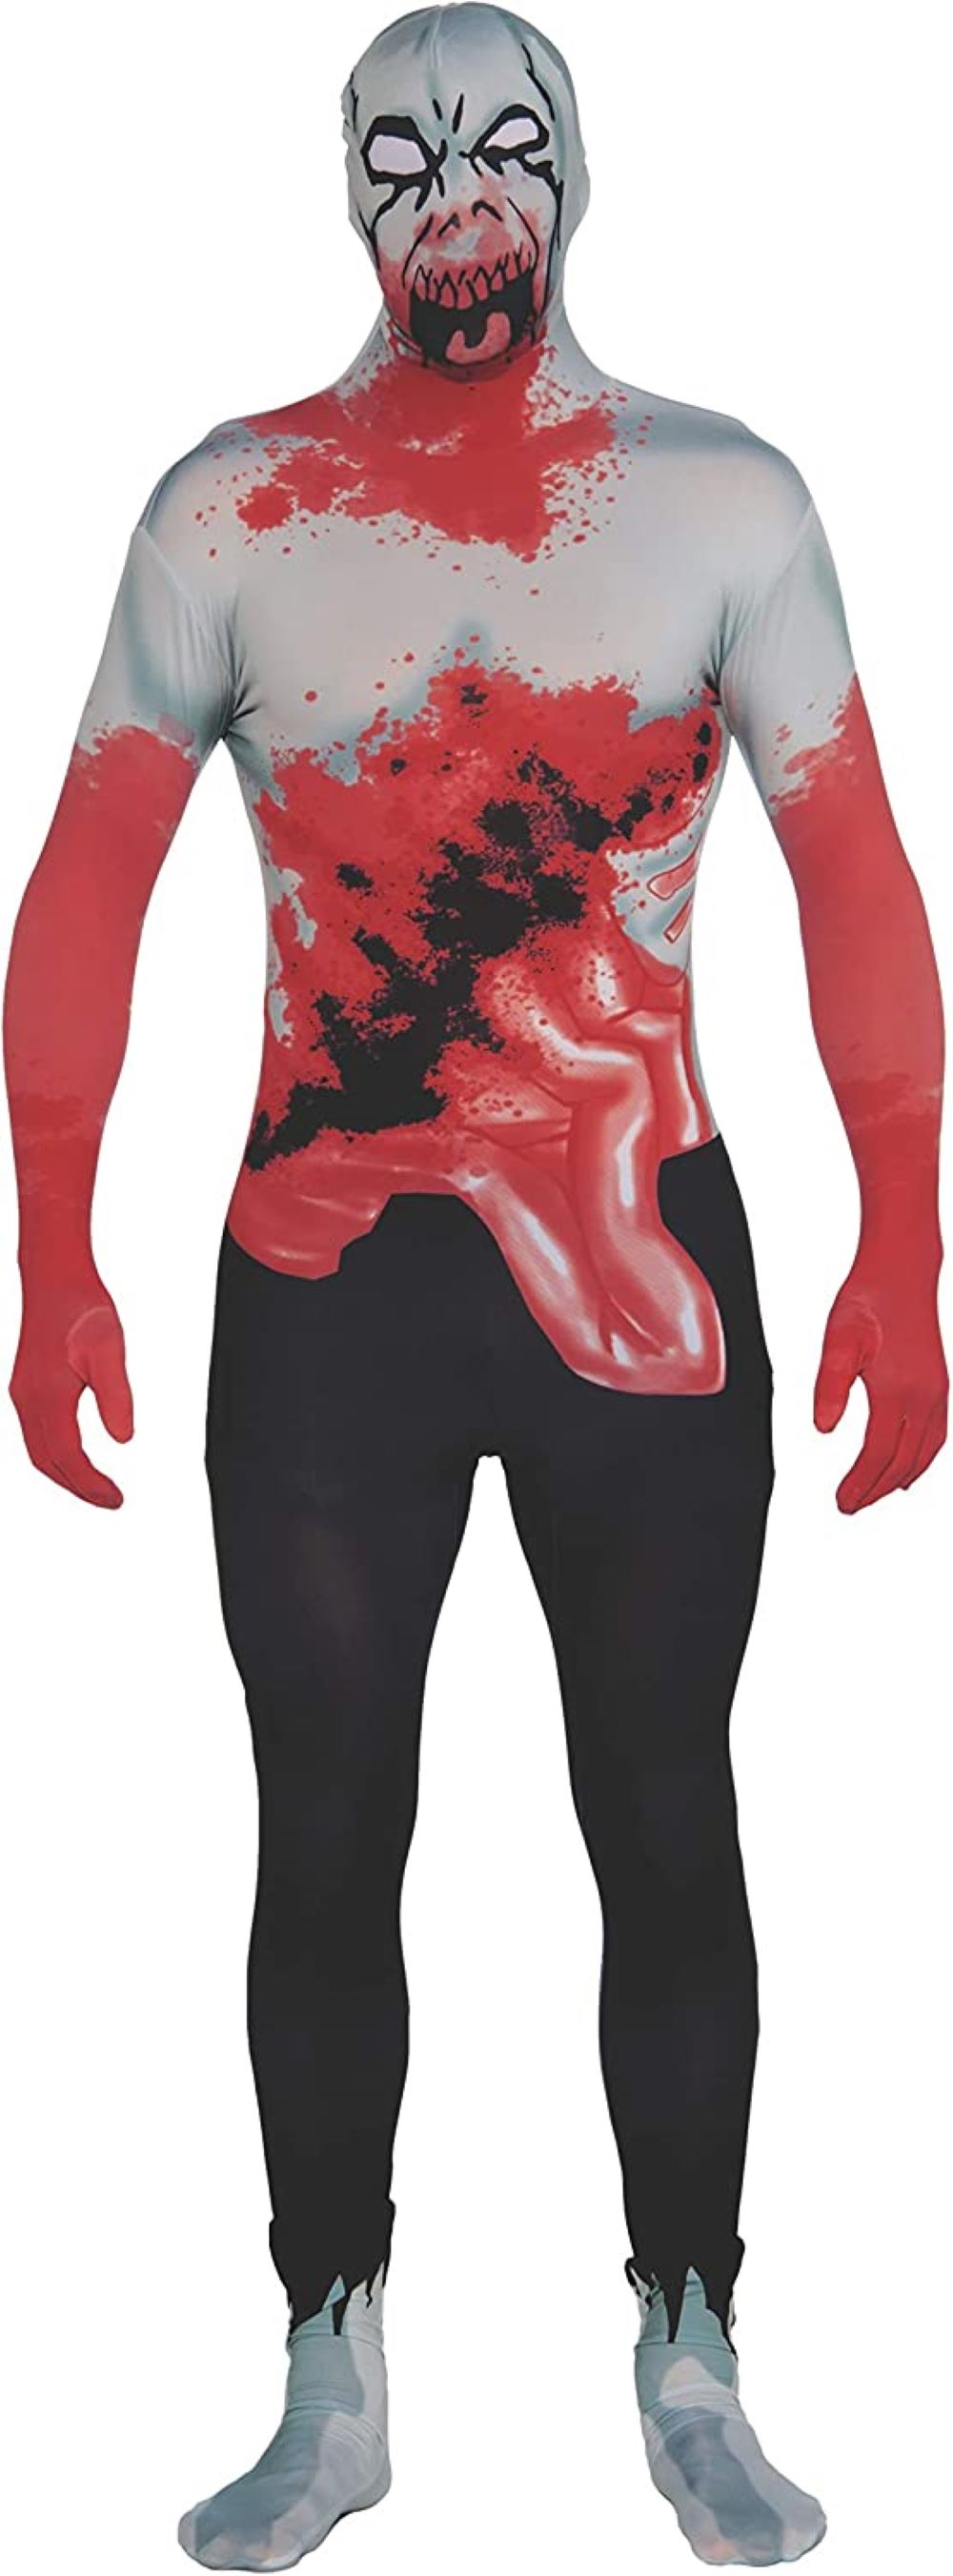 10 pcs - Halloween Fancy Dress Adult Full-body Costume Zombie 2nd Skin Stretch Green Jump Suit |GCL143-M|UK SELLER